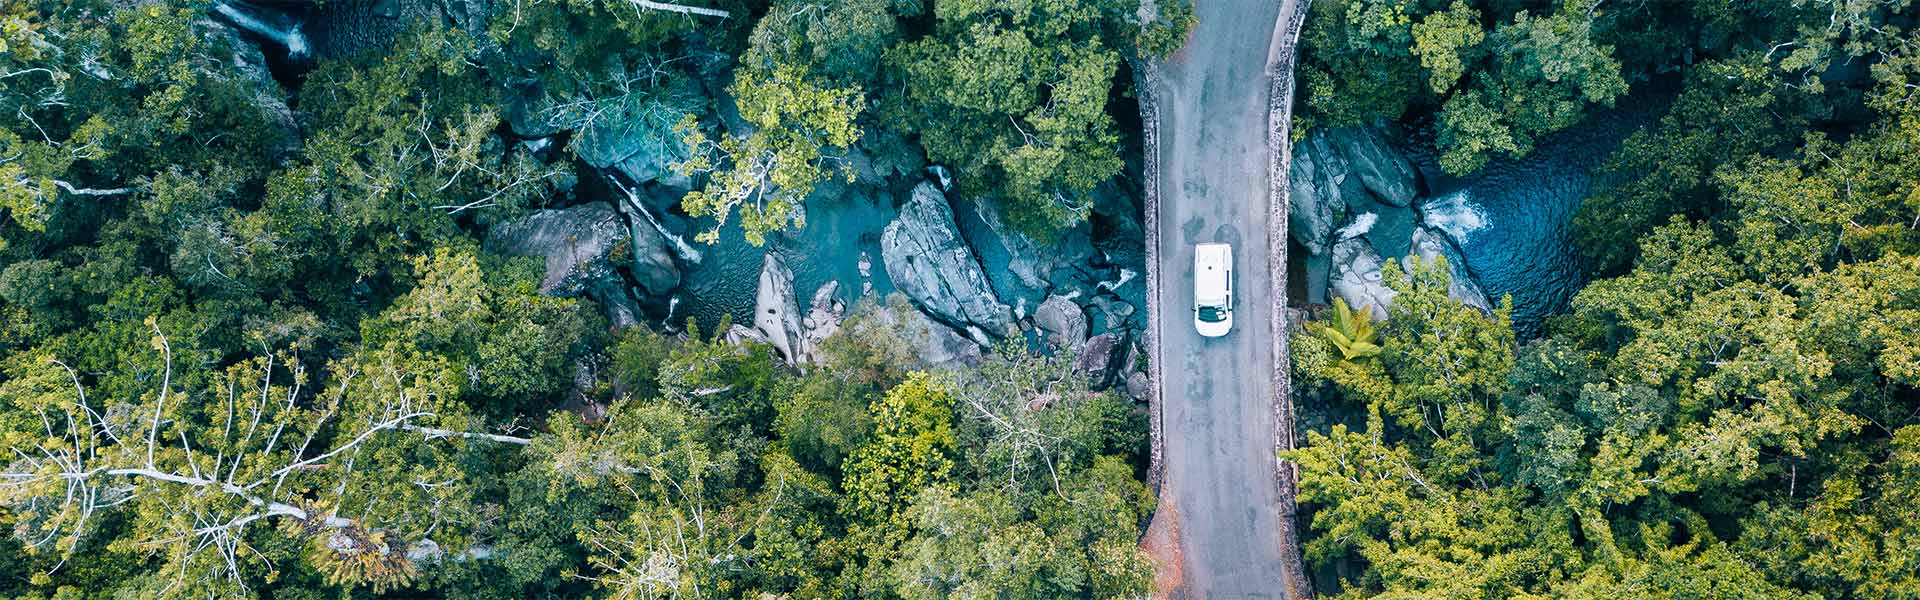 Rental Caravan vehicle driving among tall trees